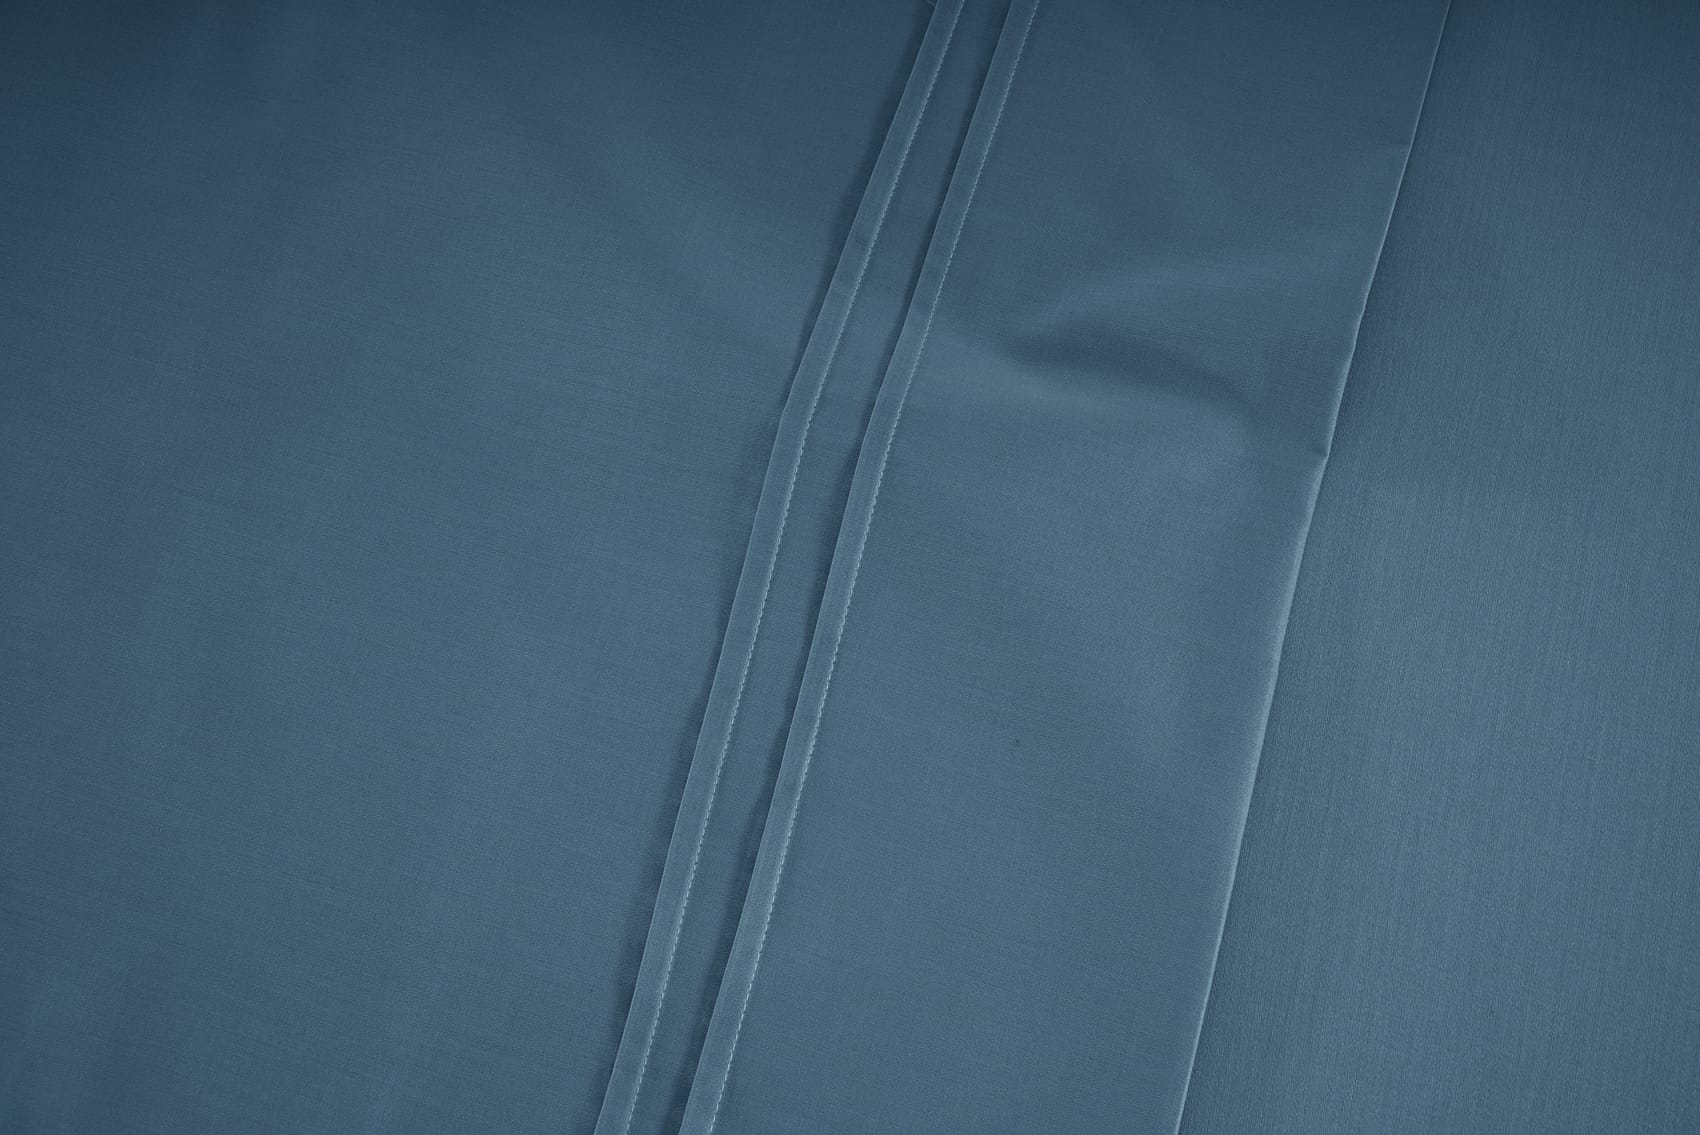 Cotton Satin 400 TC Designer Pillow Covers, Light Blue